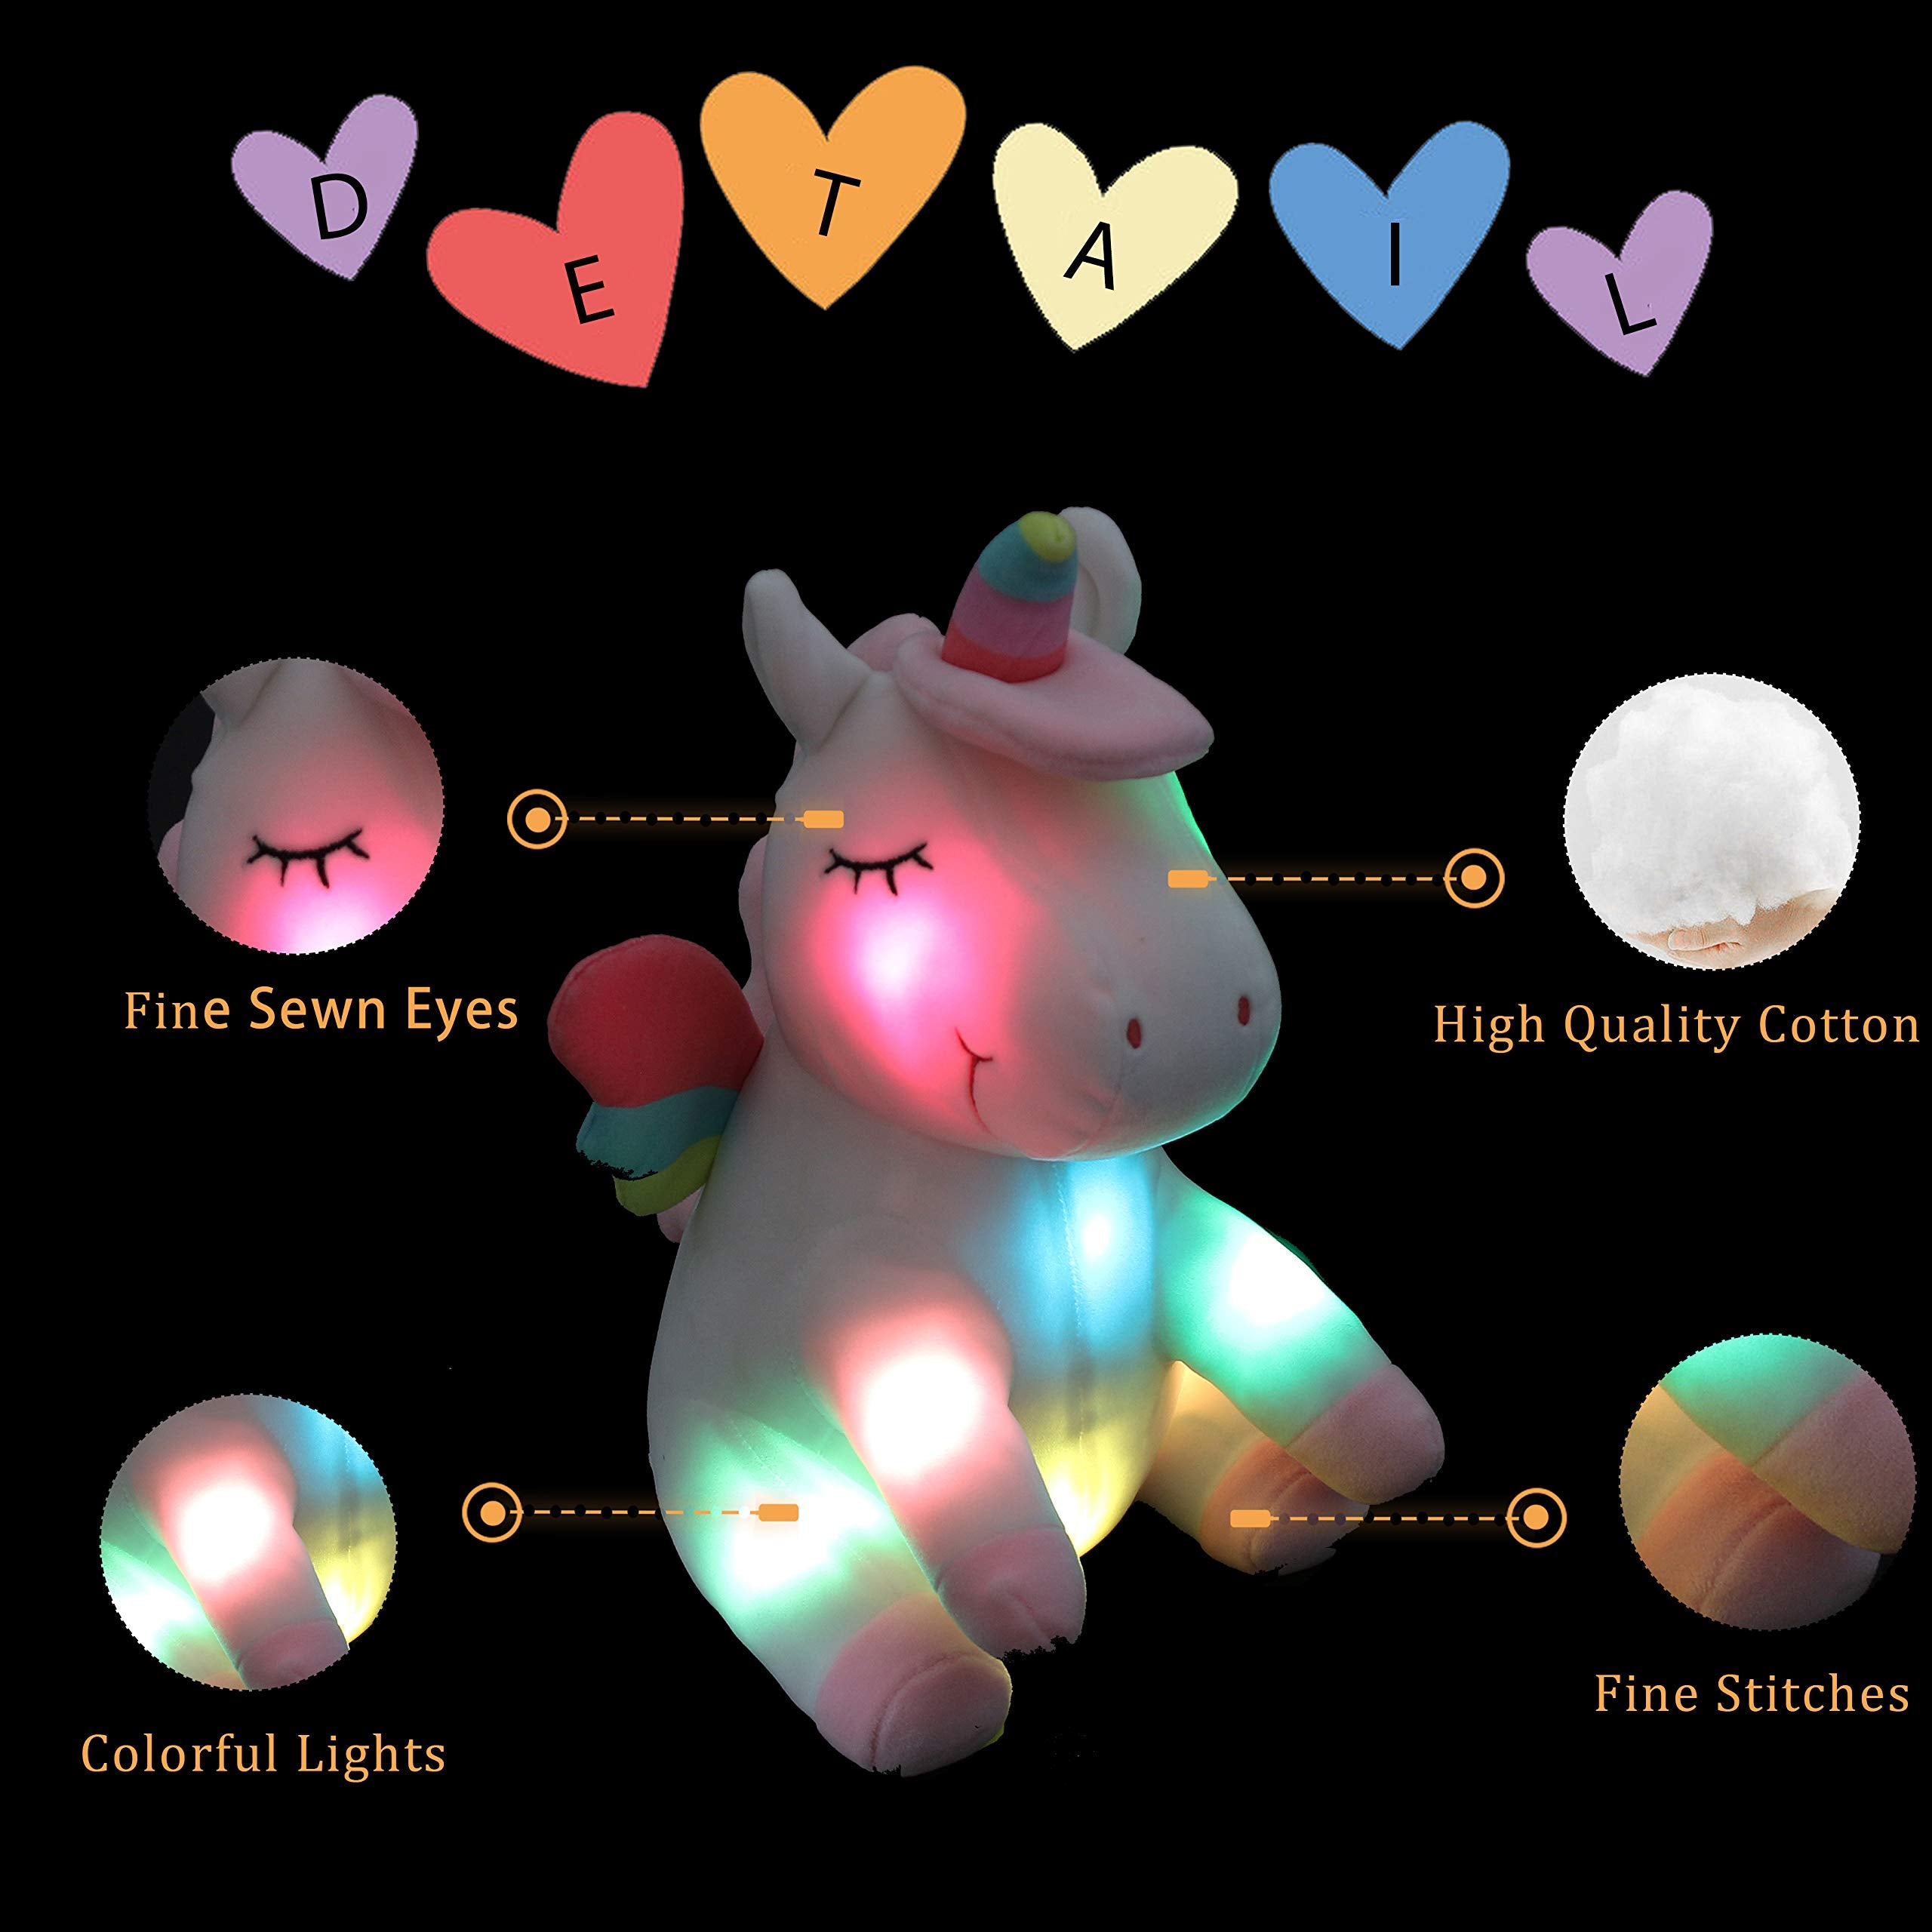 Athoinsu Light up Unicorn Soft Plush Toy LED Stuffed Animals - Glow Guards